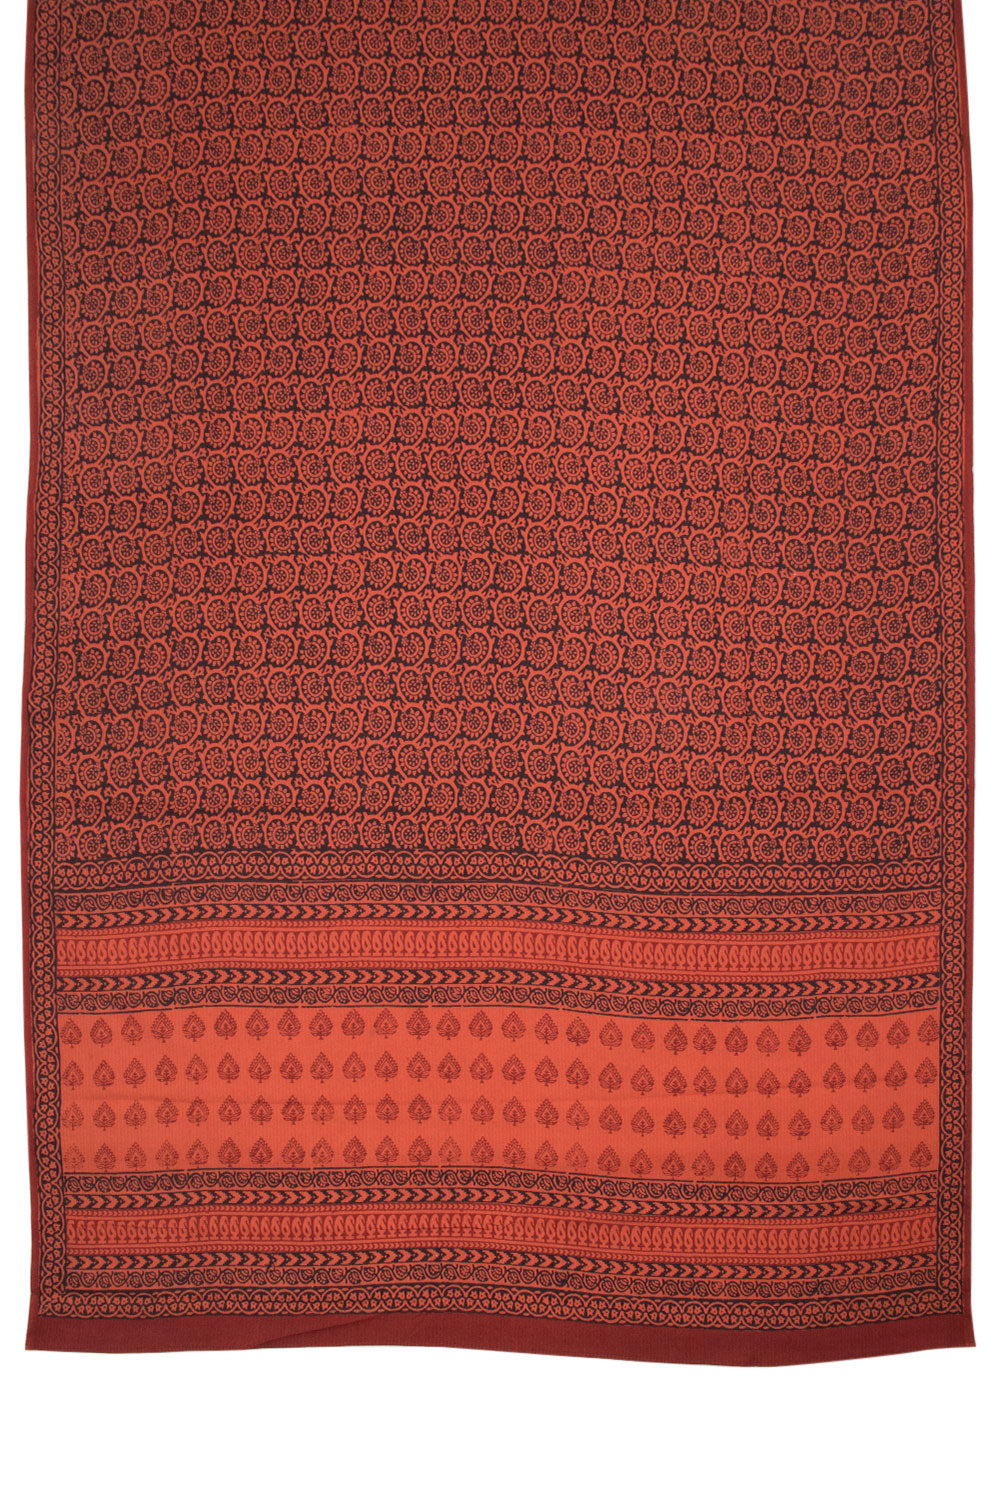 Caramel Brown with Black Bagh Printed Cotton 3-Piece Salwar Suit Material - 10063605